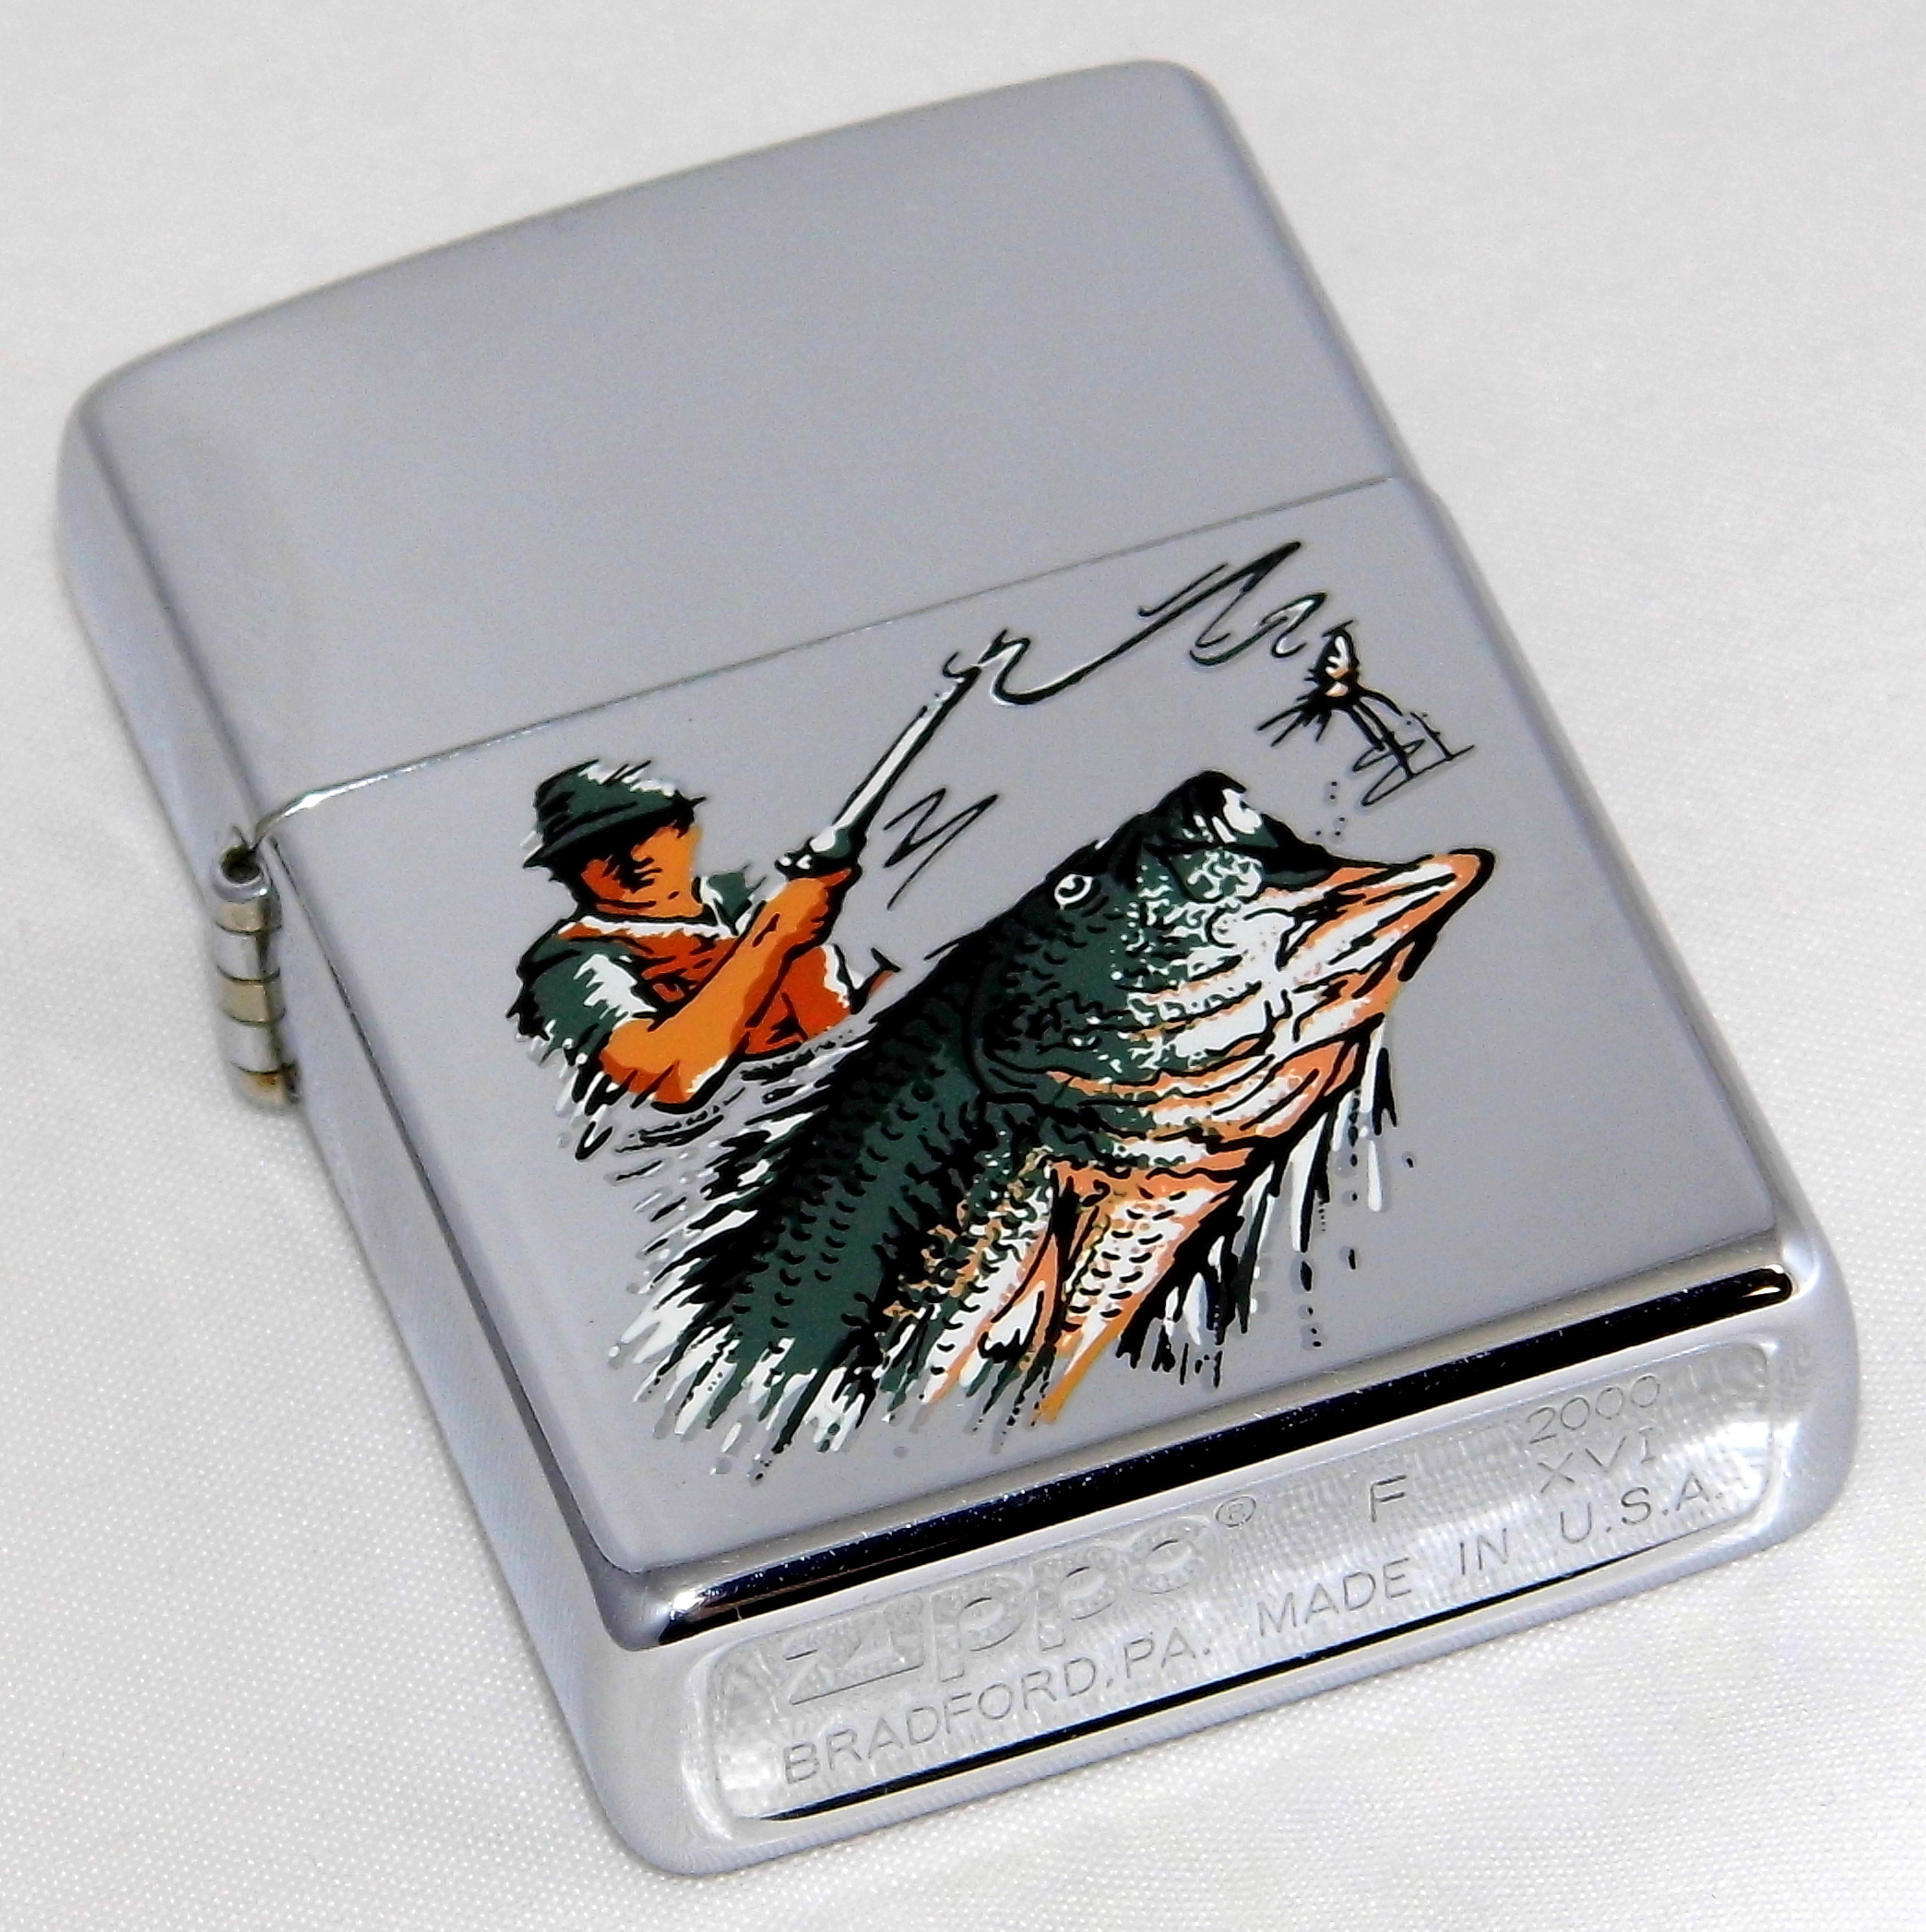 File:Zippo Cigarette Lighter With Fishing Scene, Made In USA  (38849909300).jpg - Wikimedia Commons